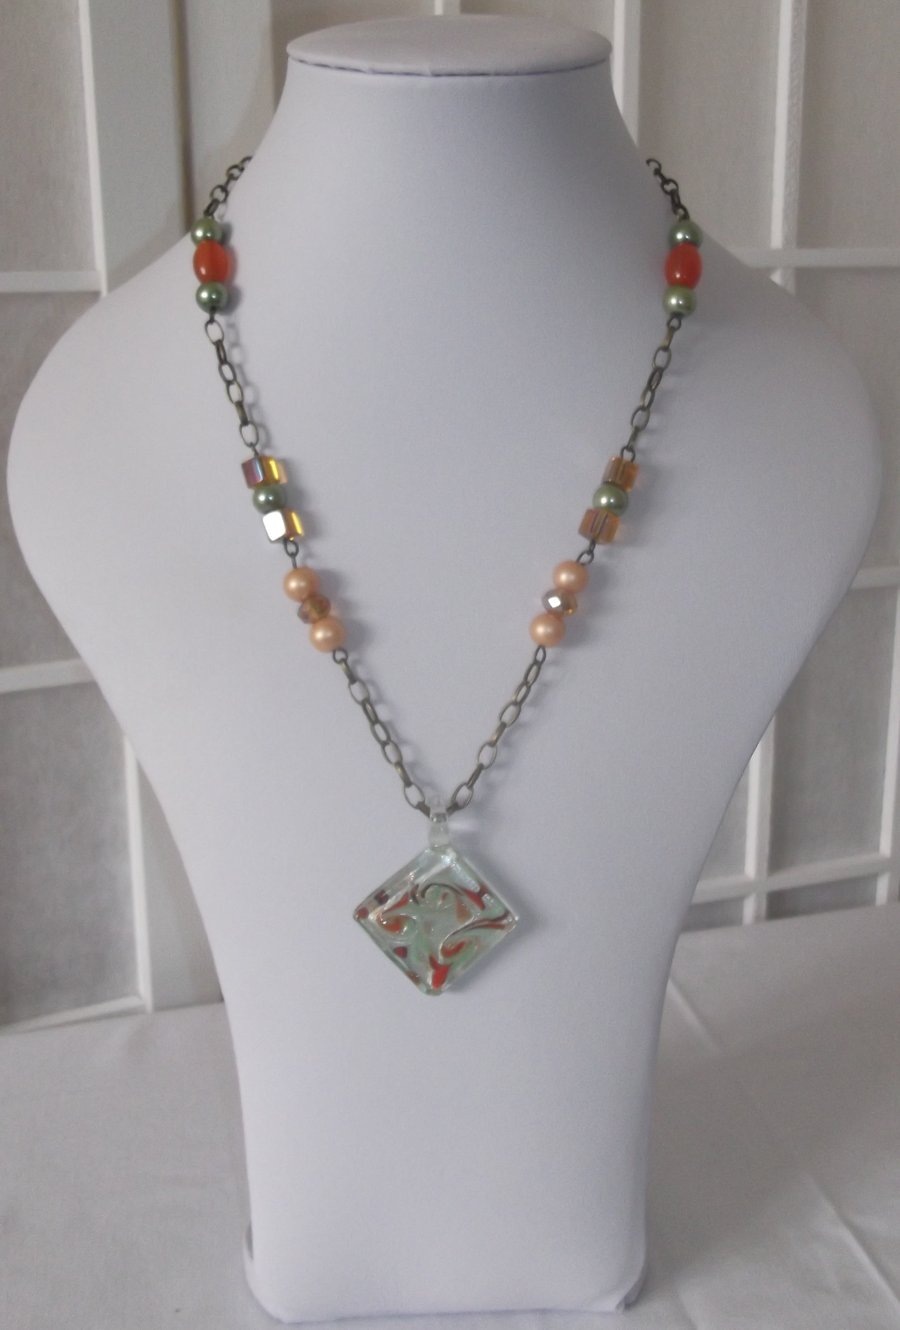 Orange glass pendant necklace